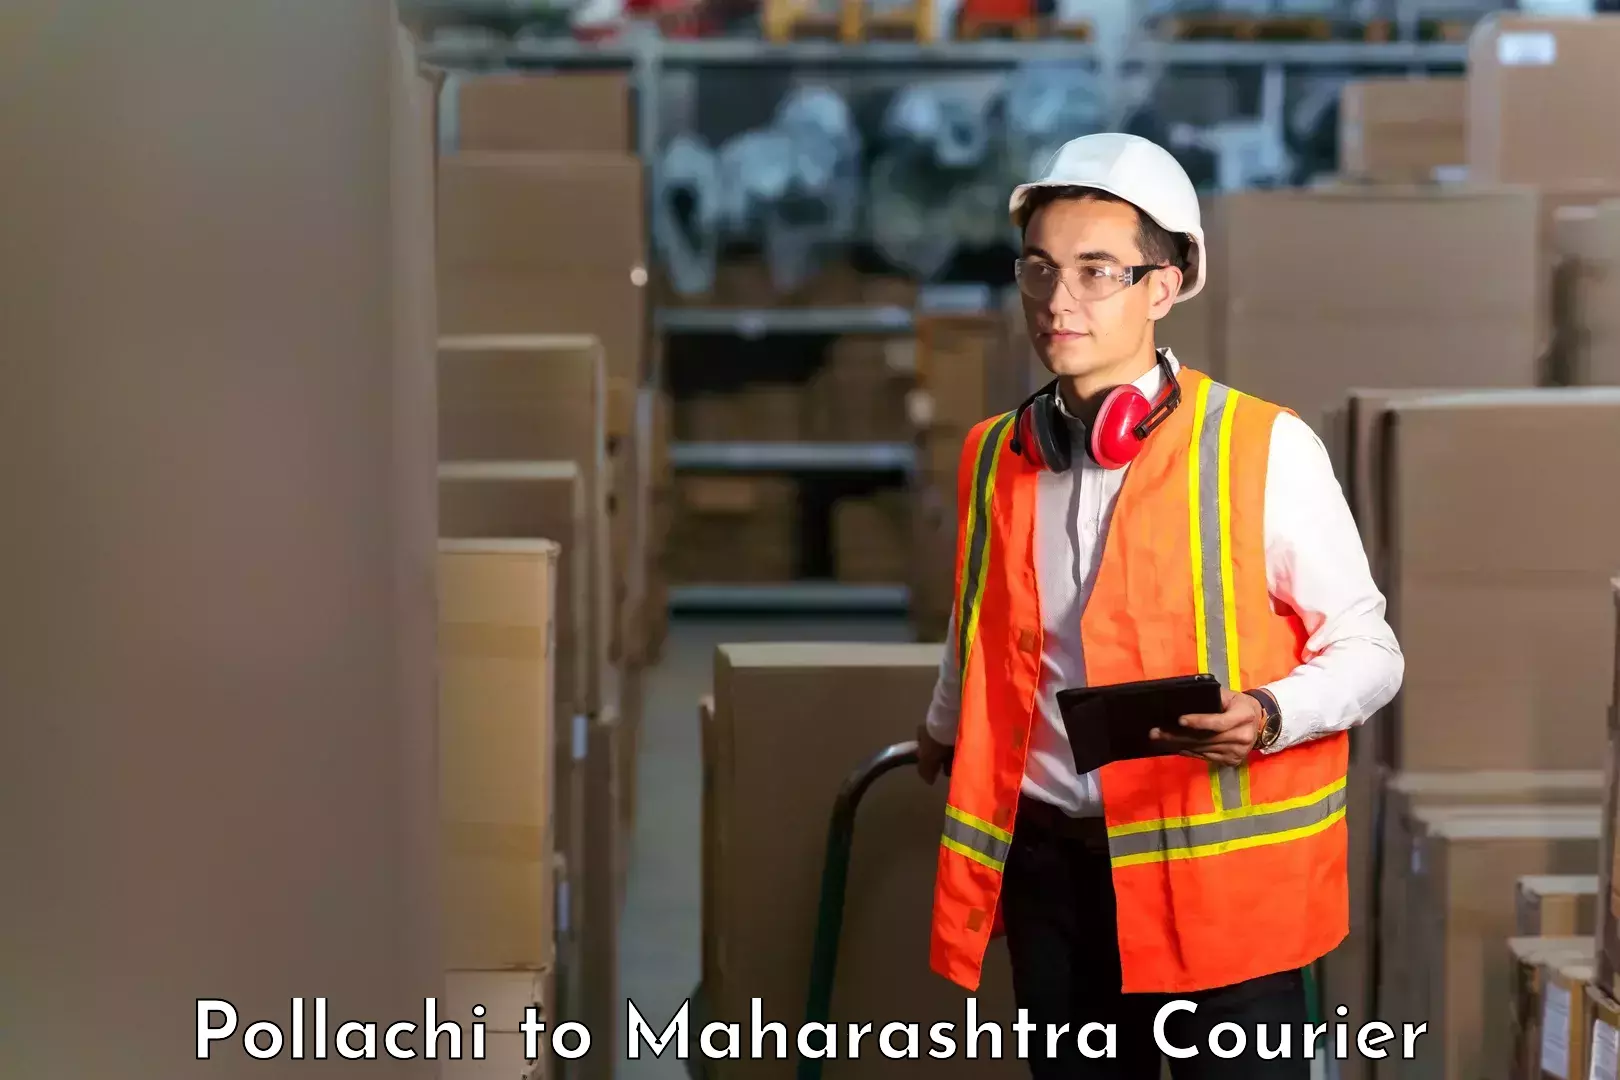 Doorstep delivery service Pollachi to Ahmednagar